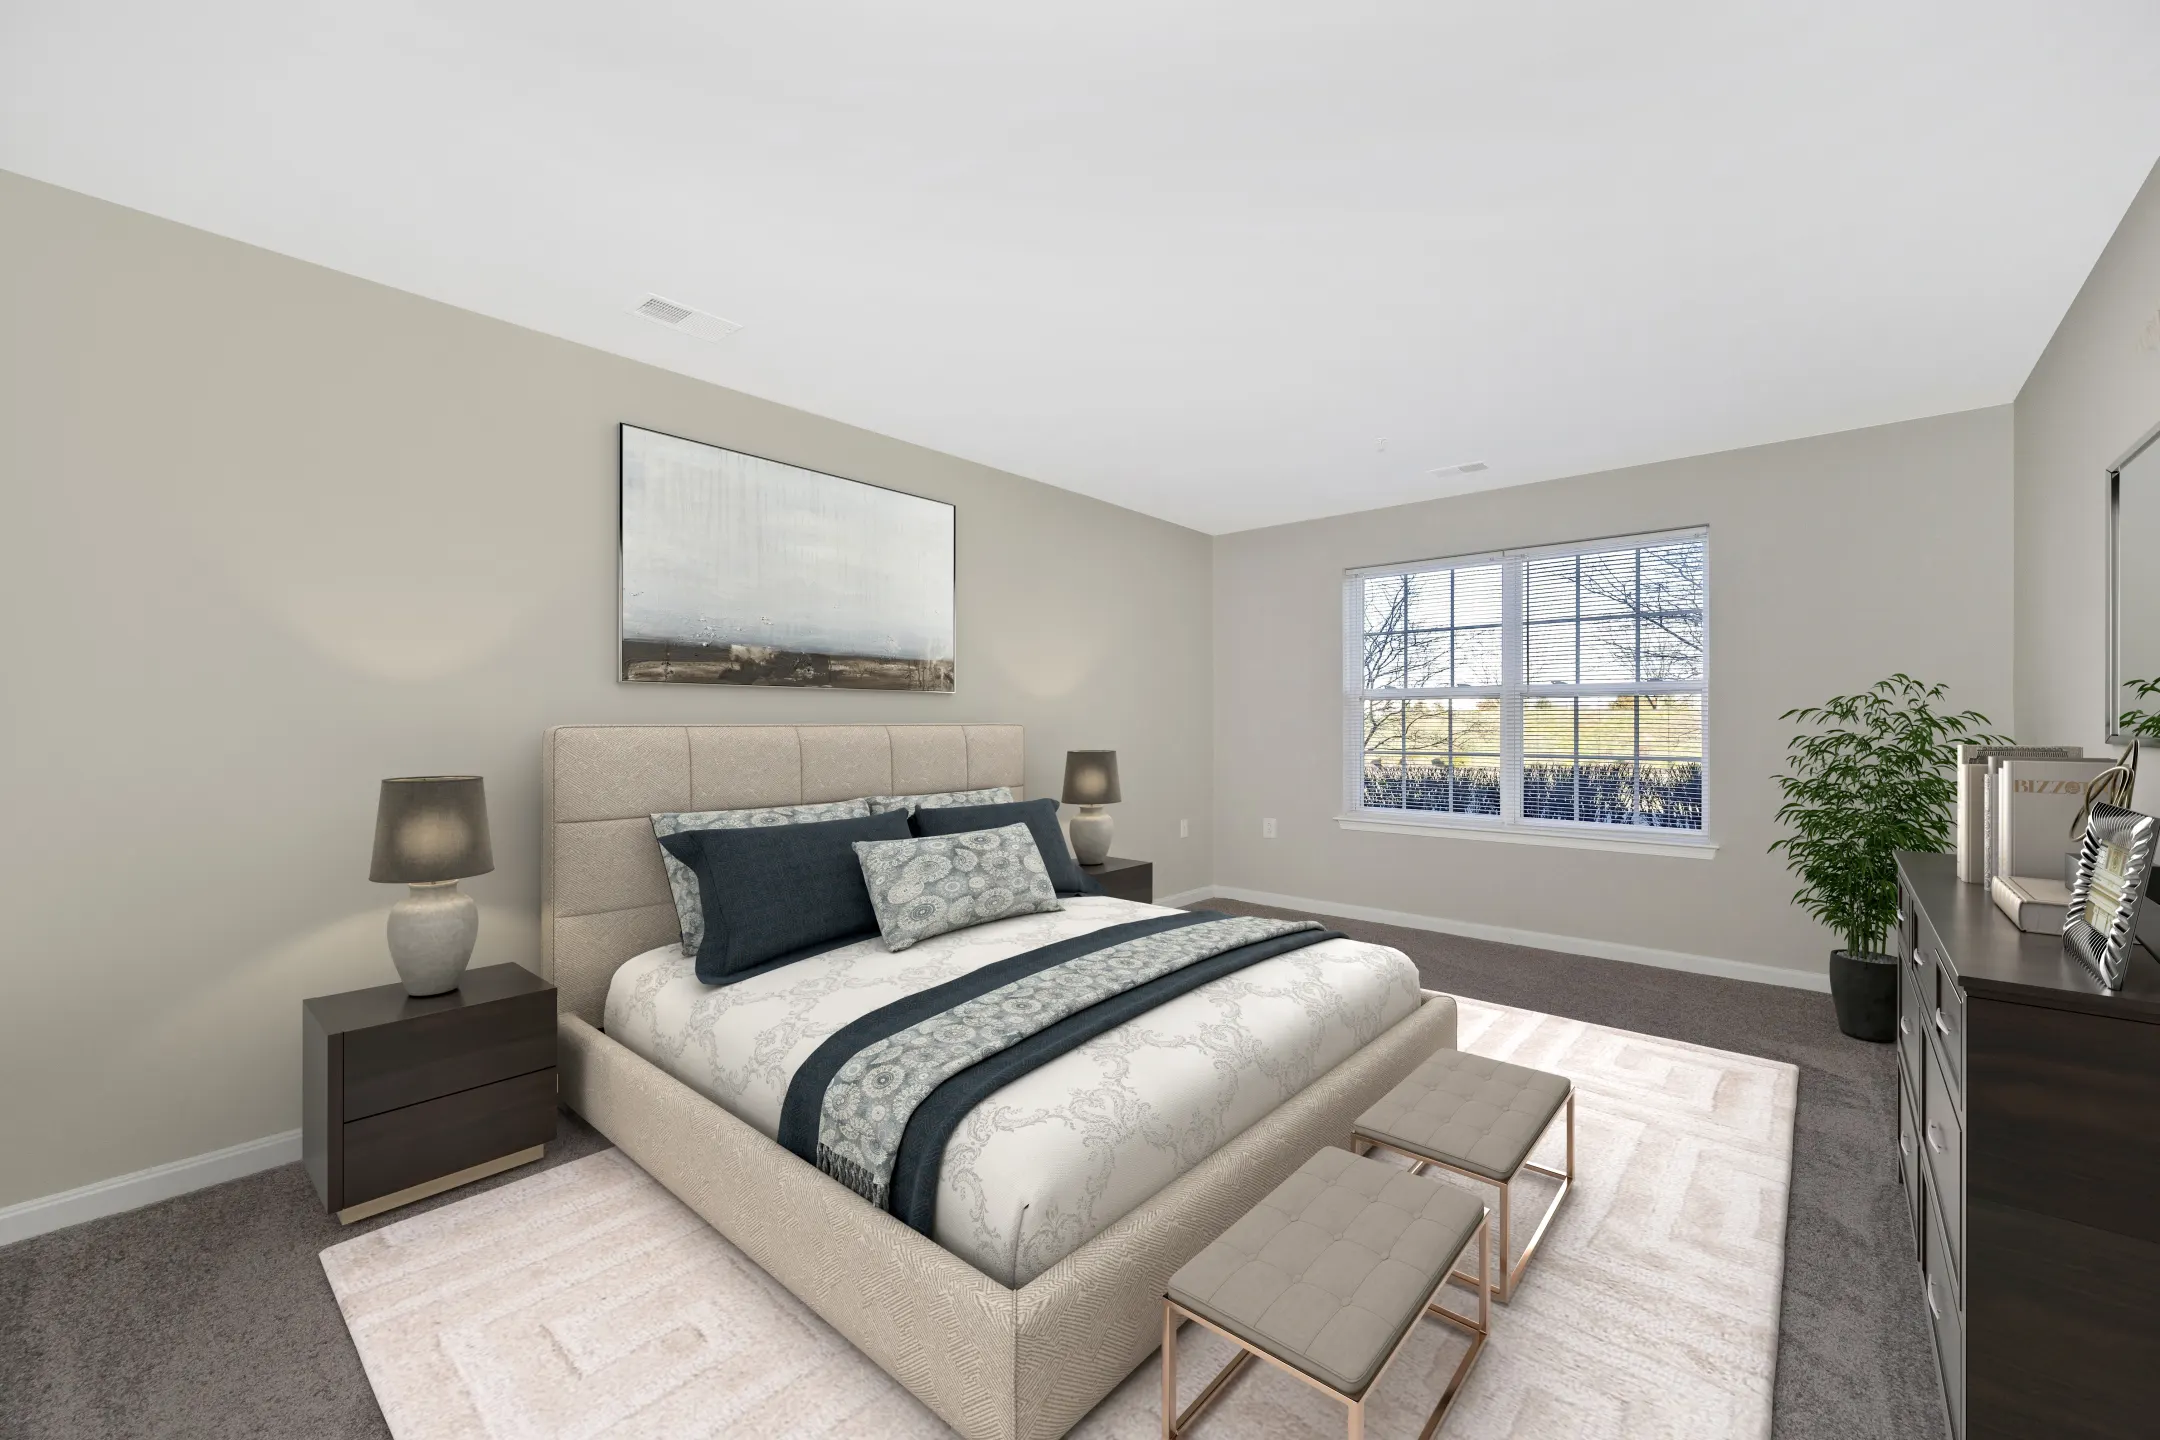 Bedroom - Fairway Vista Apartments - Frederick, MD